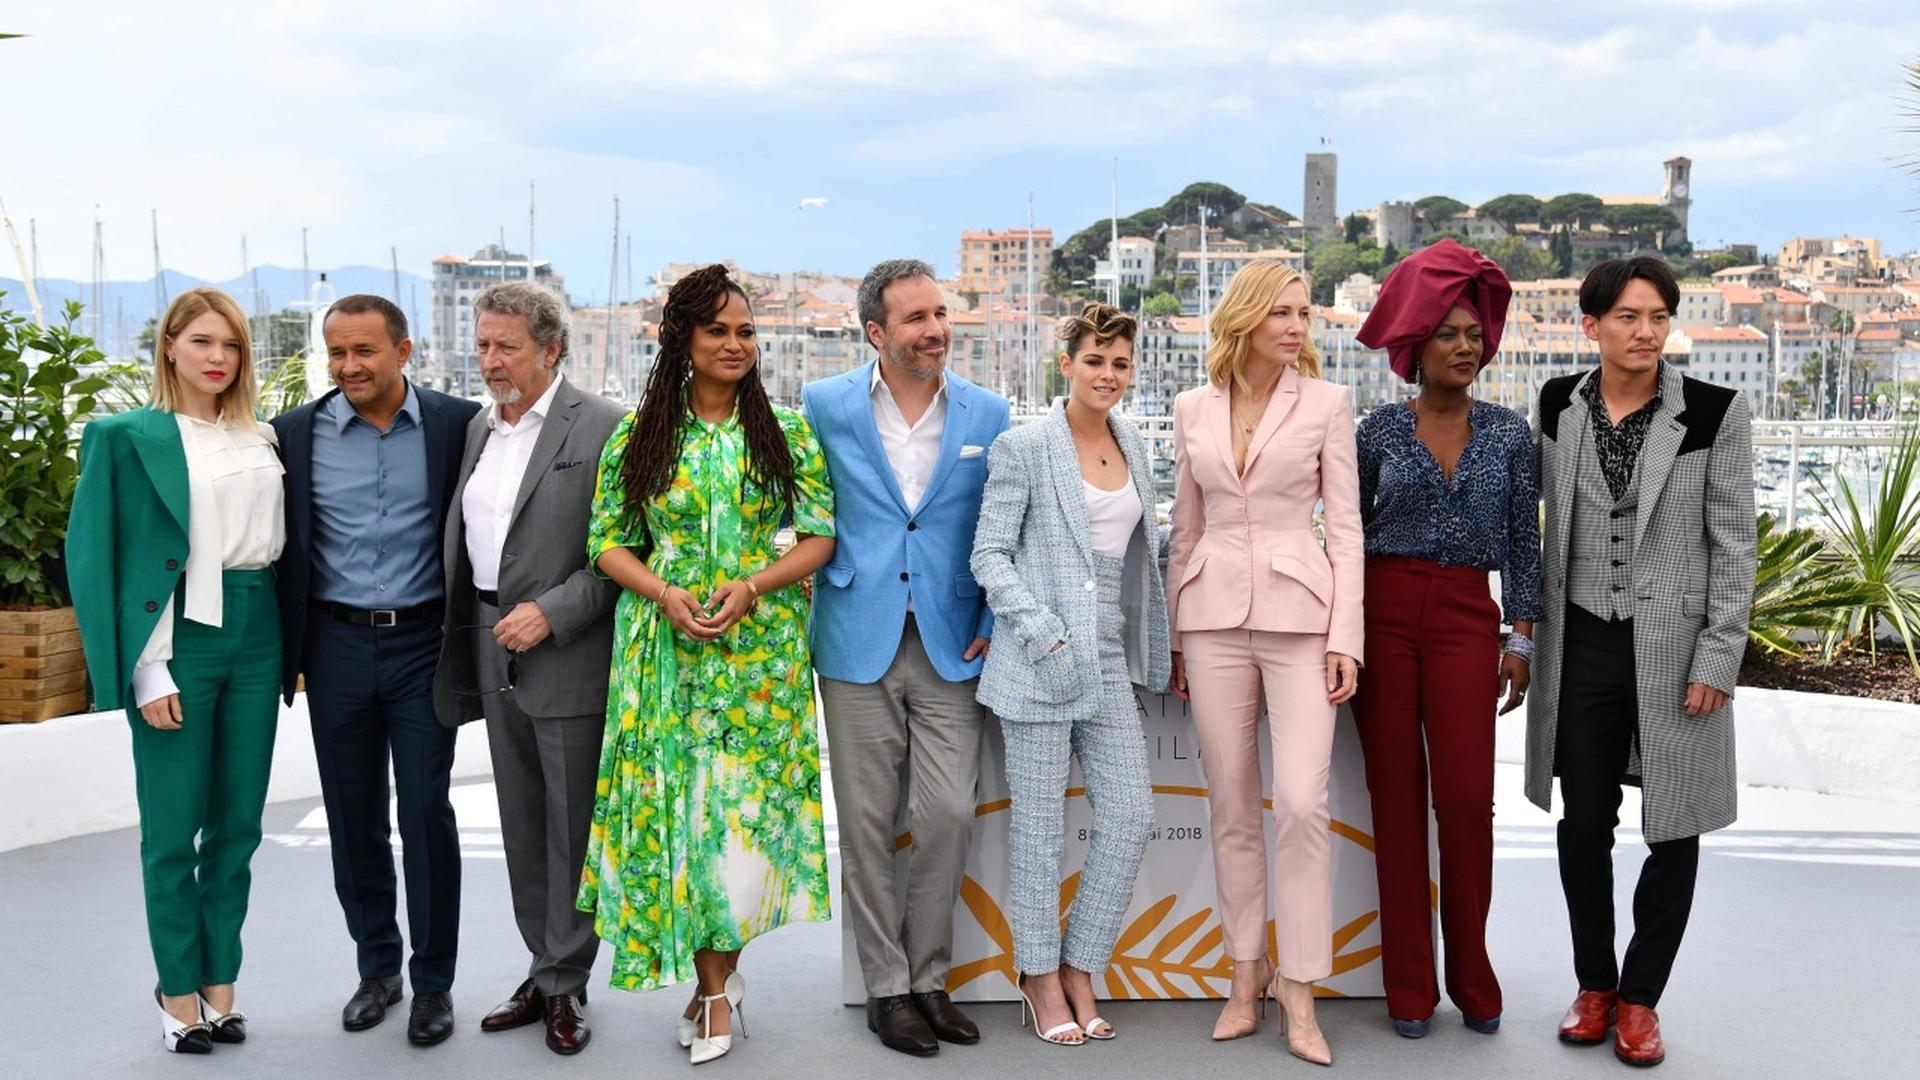 Le jury du festival de Cannes de gauche à droite: Léa Seydoux, Andrey Zvyagintsev, Robert Guediguian, Ava DuVernay, Denis Villeneuve, Kristen Stewart, Cate Blanchett, Khadja Nin, Chang Chen.  